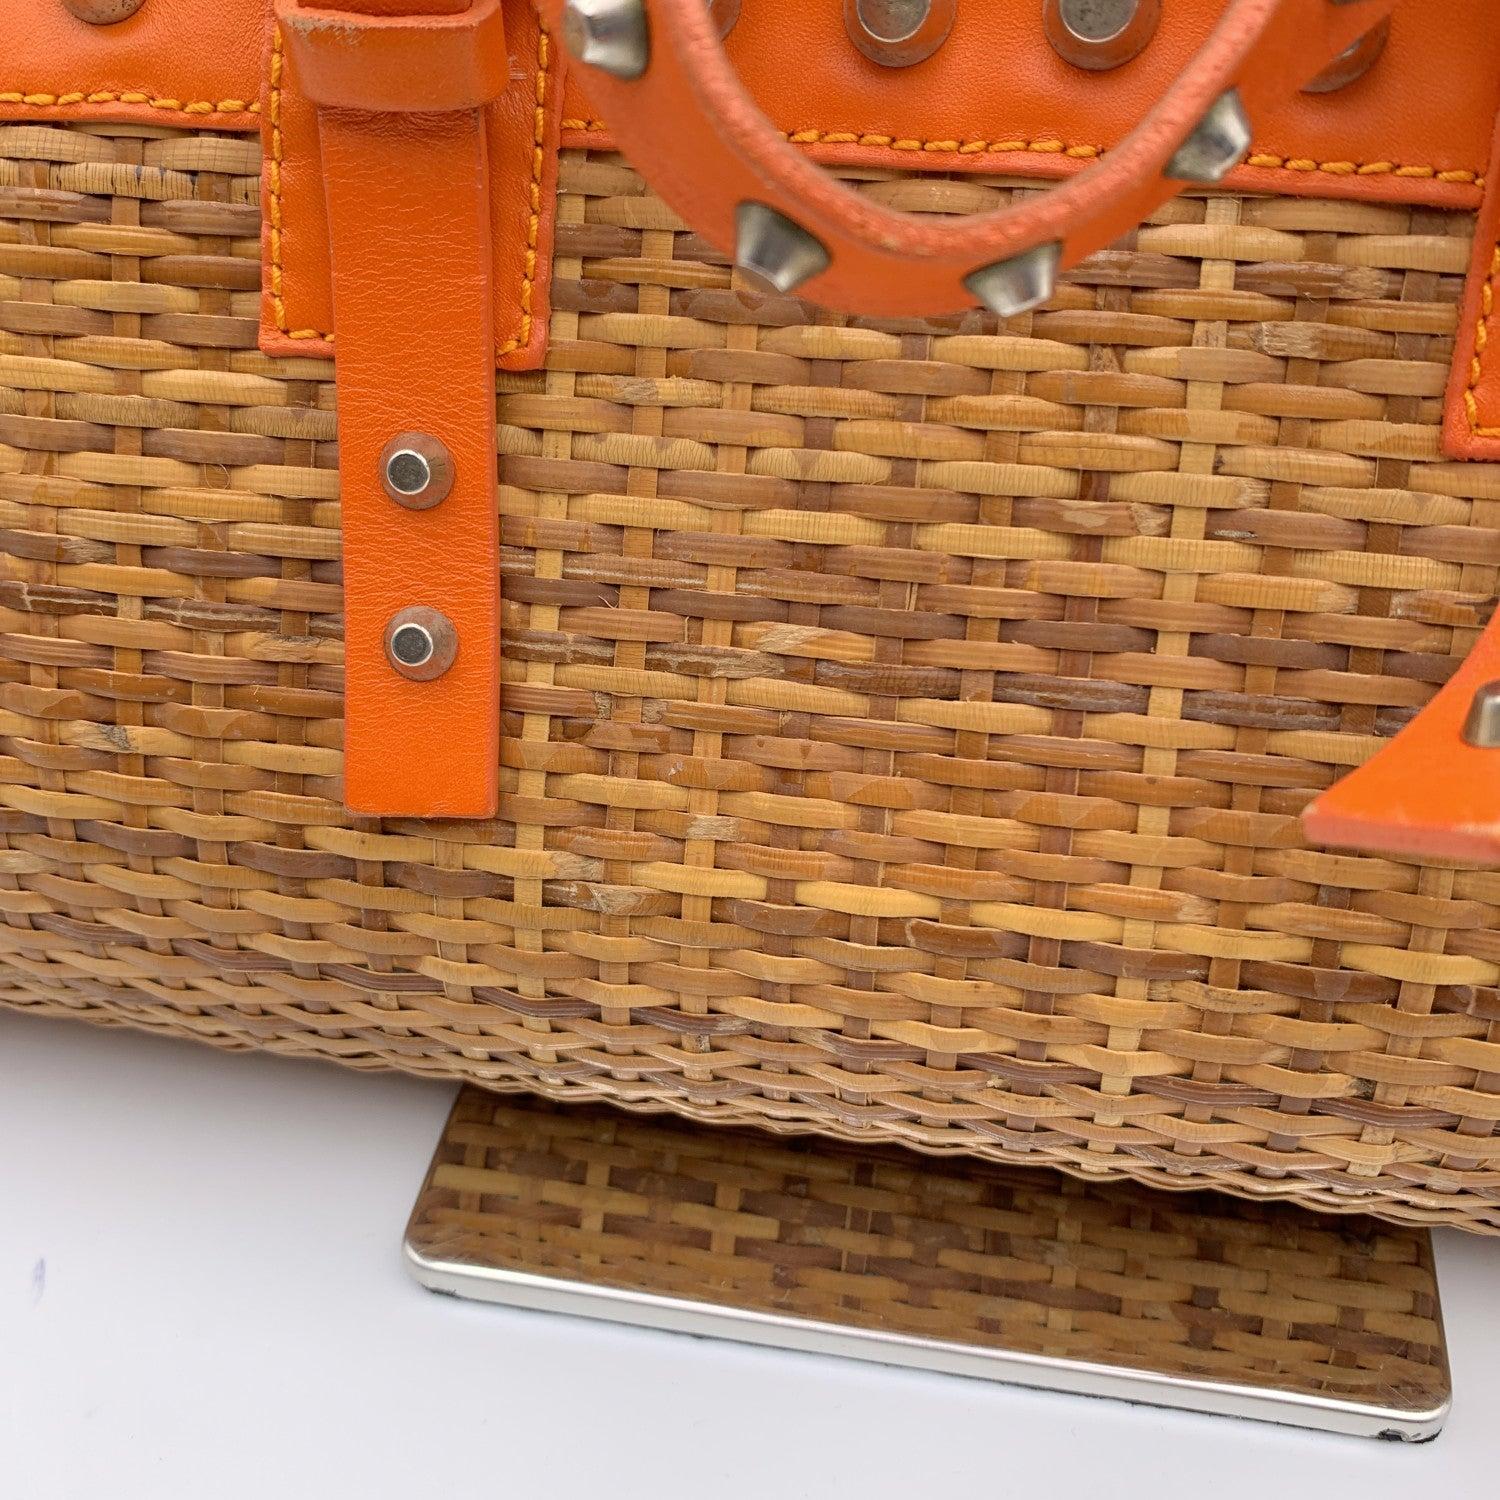 Fendi Wicker and Orange Leather Studded Tote Handbag Satchel For Sale 1